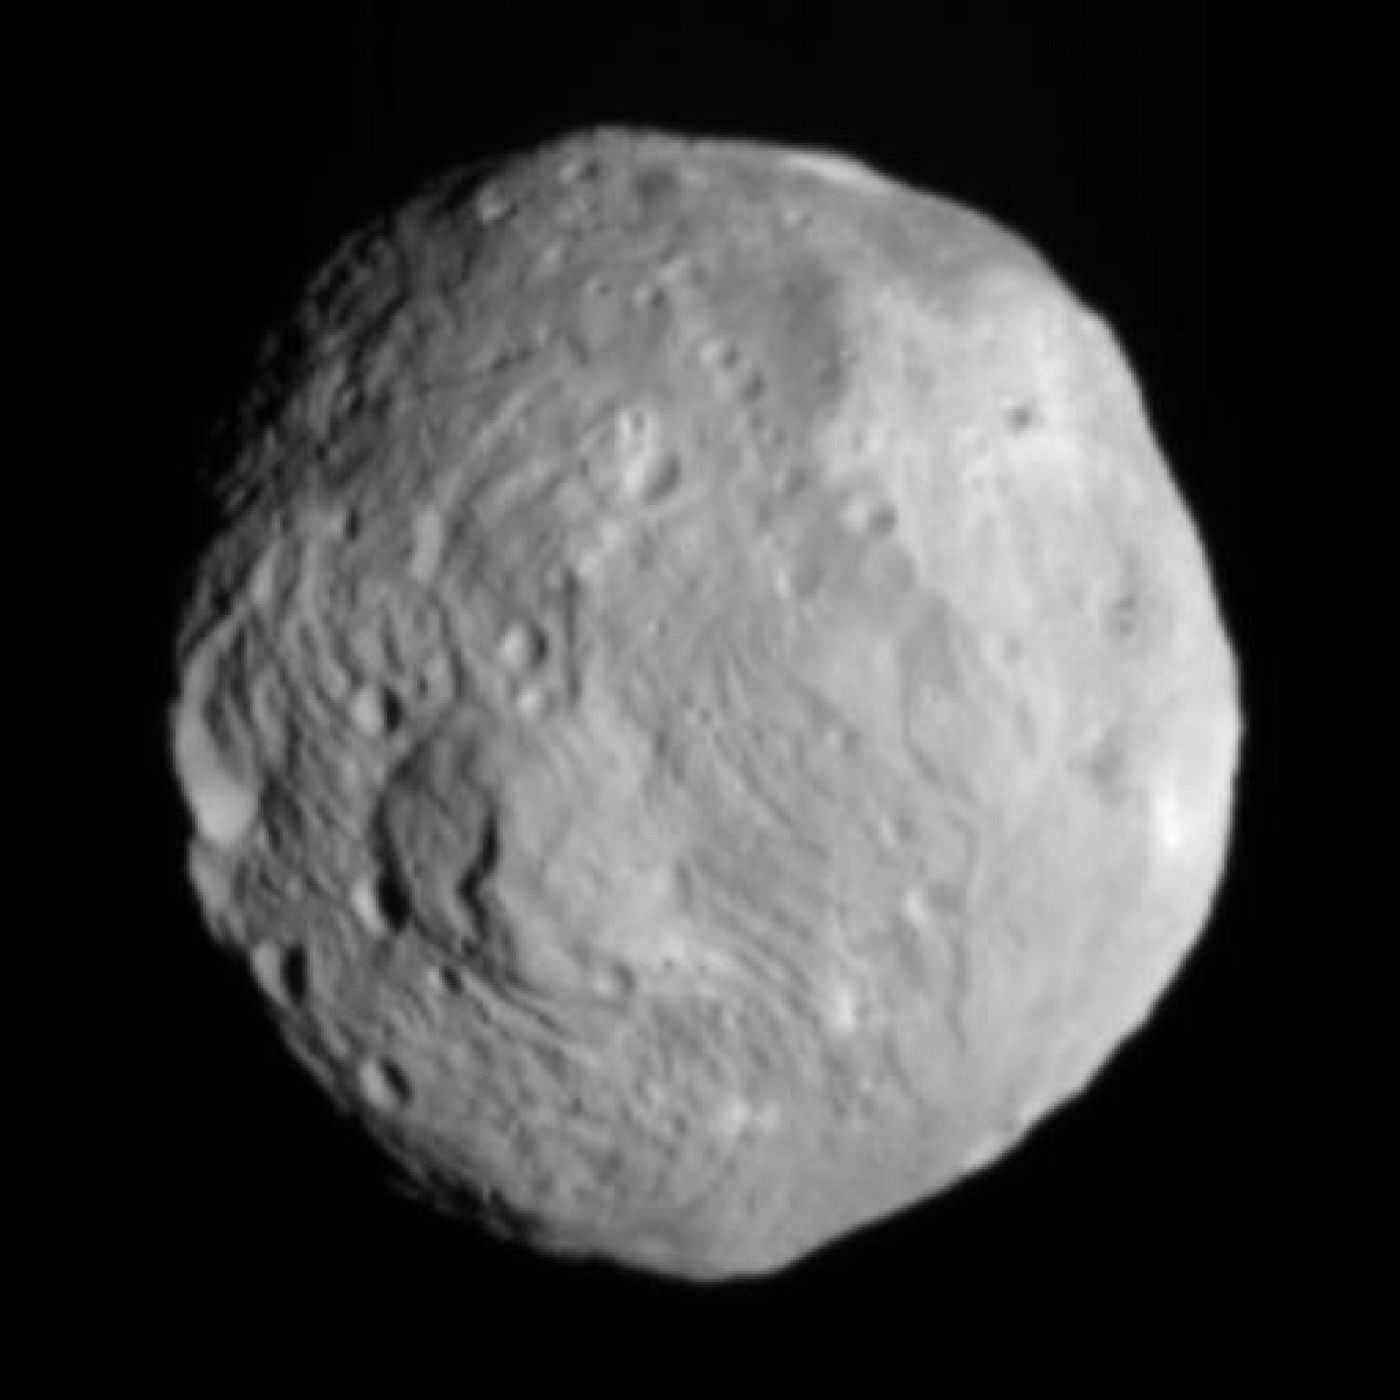 El asteroide Vesta fotografiado por la sonda Dawn